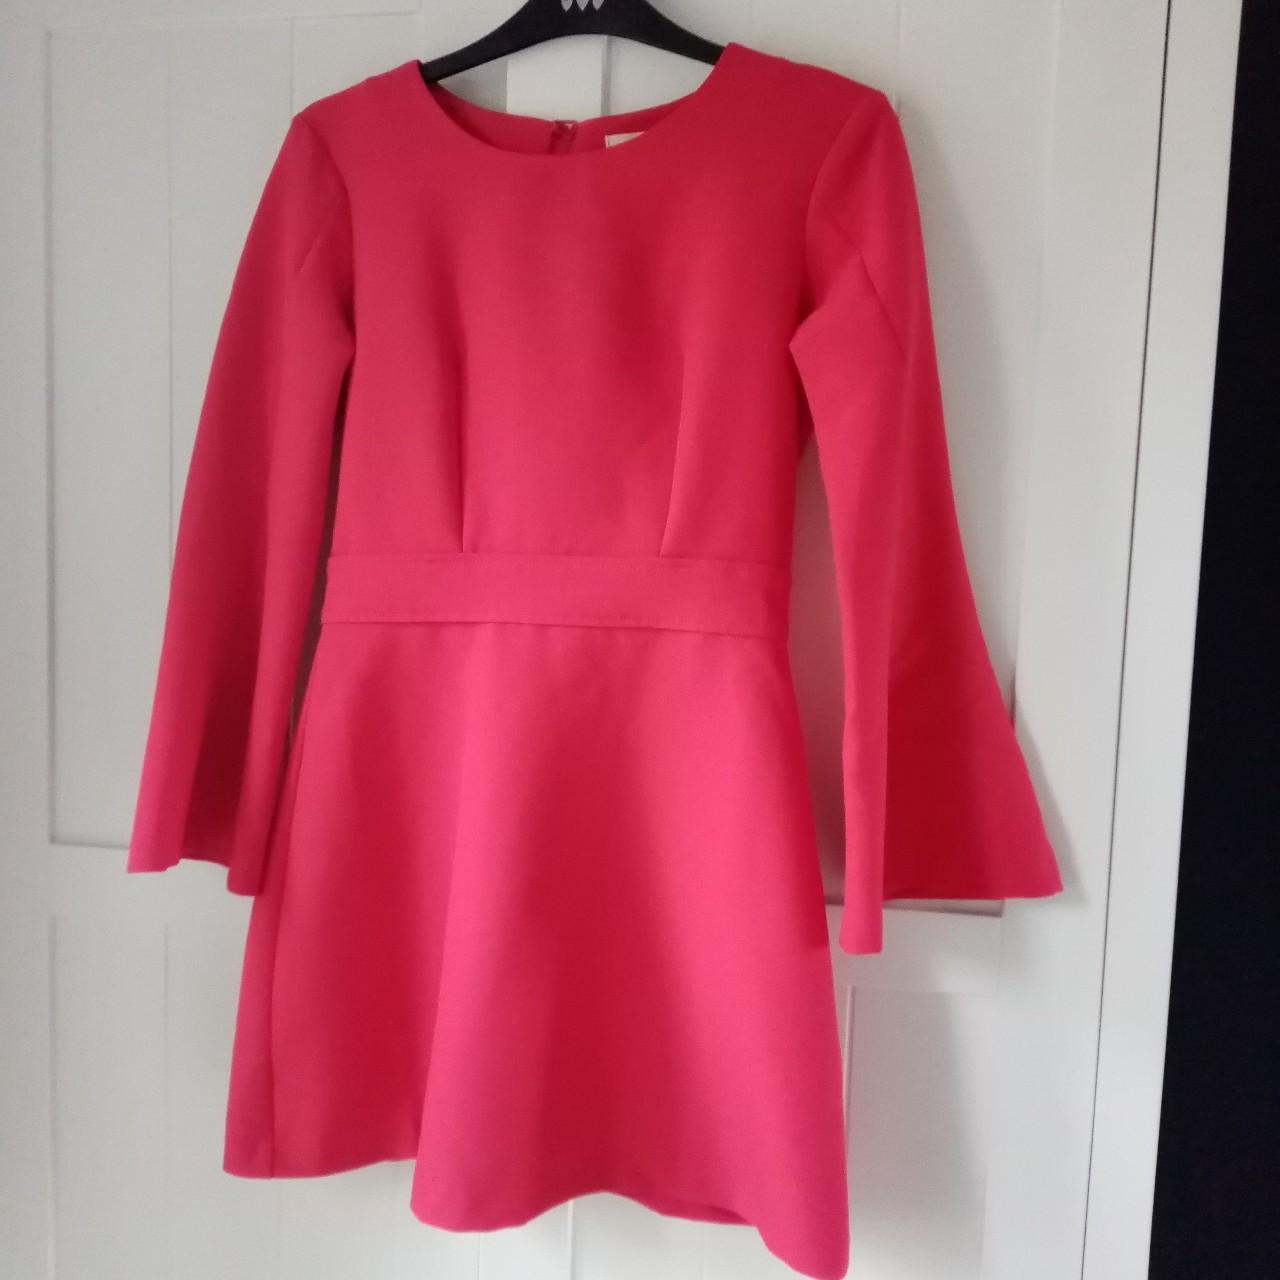 H&M pink dress. Thick good quality material. Got... - Depop